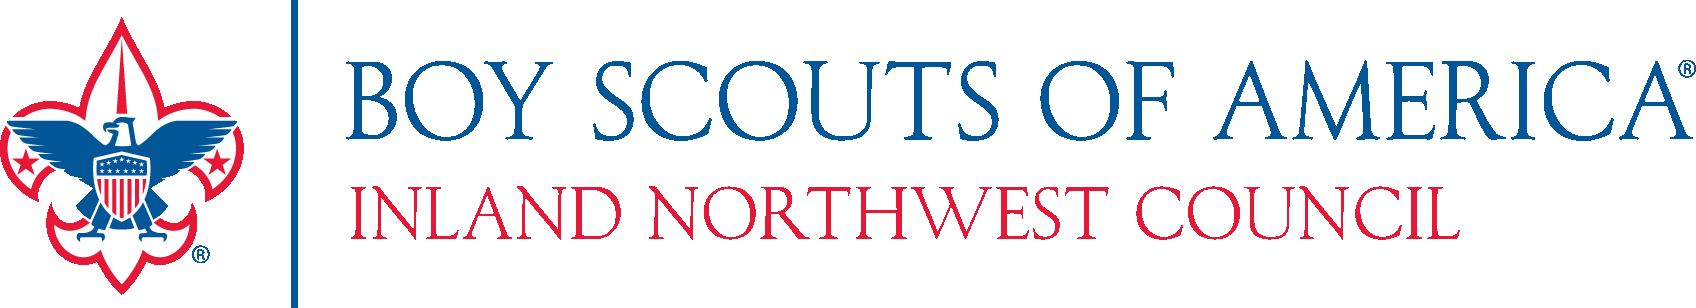 nwscouts.org logo